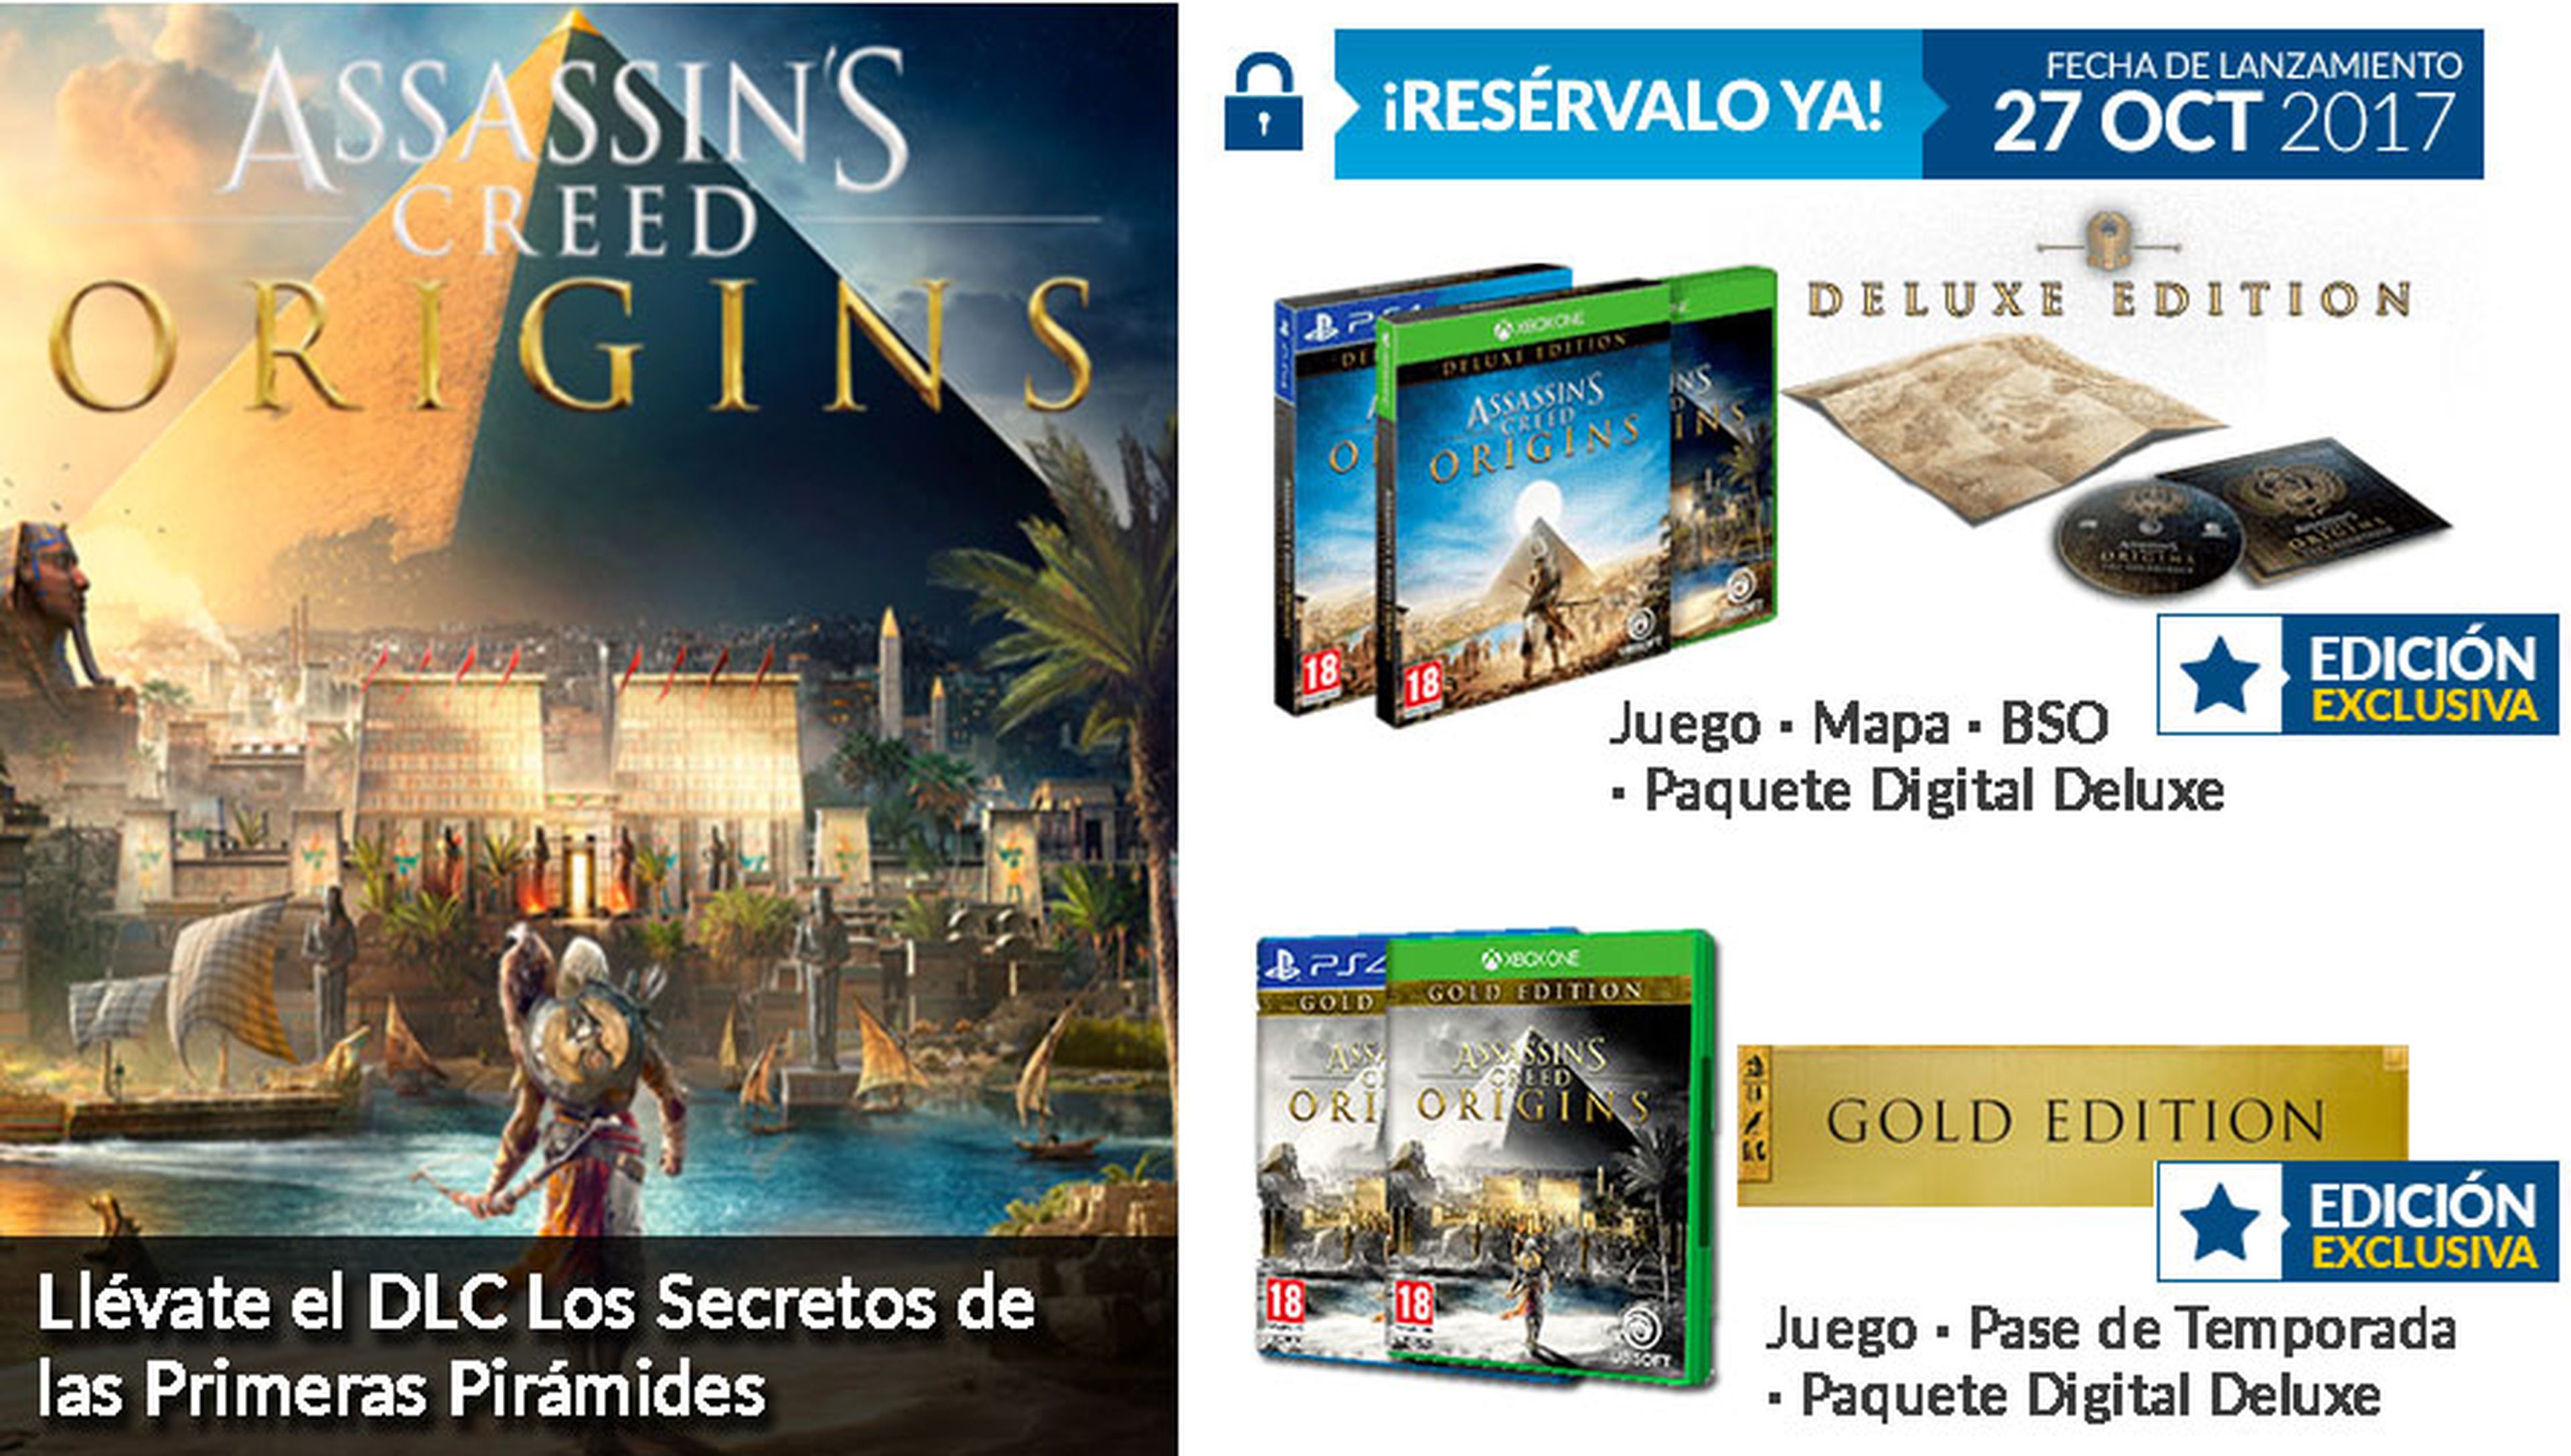 Assassin's Creed Origins GAME